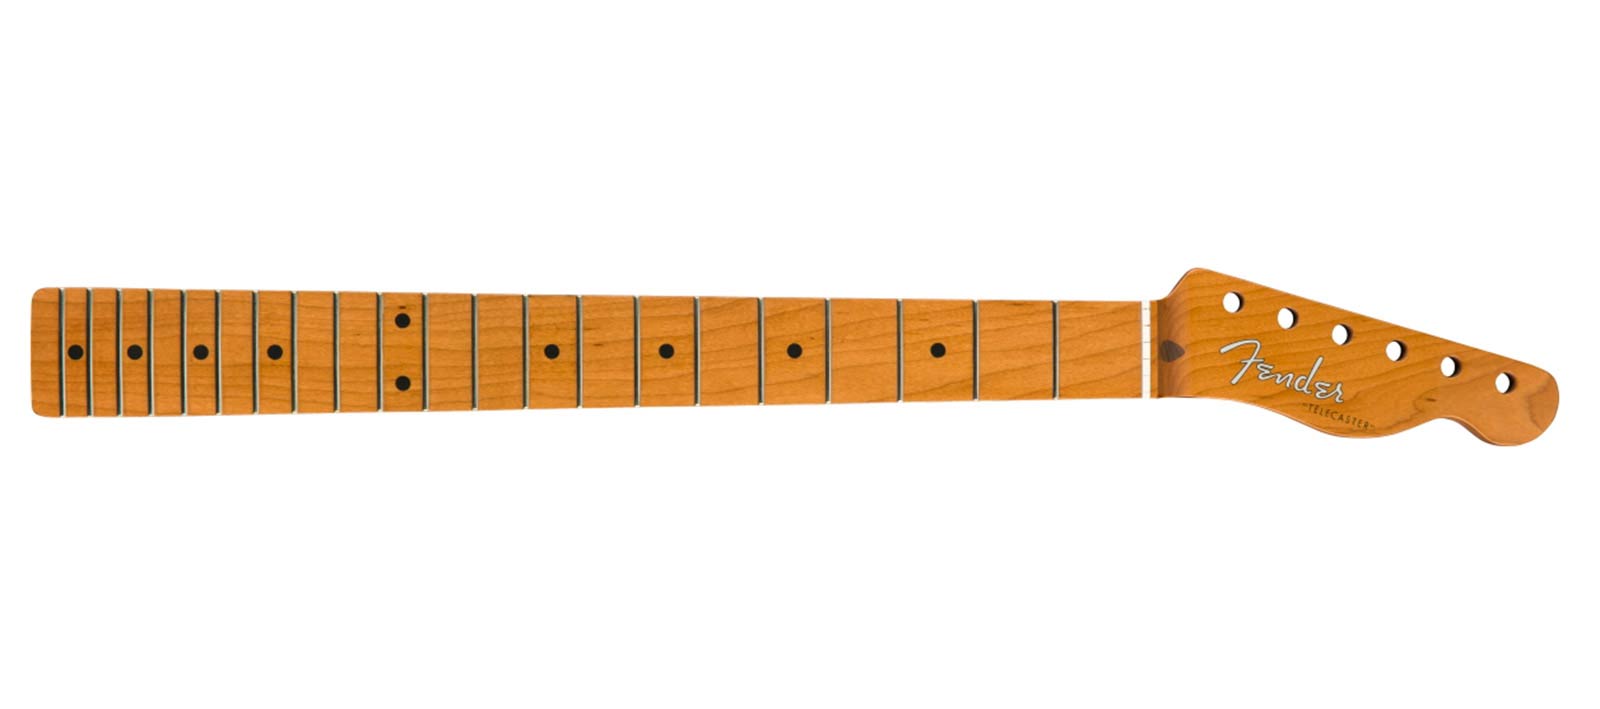 Fender 0999862920 Vintera roasted maple 50's Telecaster neck, 21 medium jumbo frets, 9.5" radius